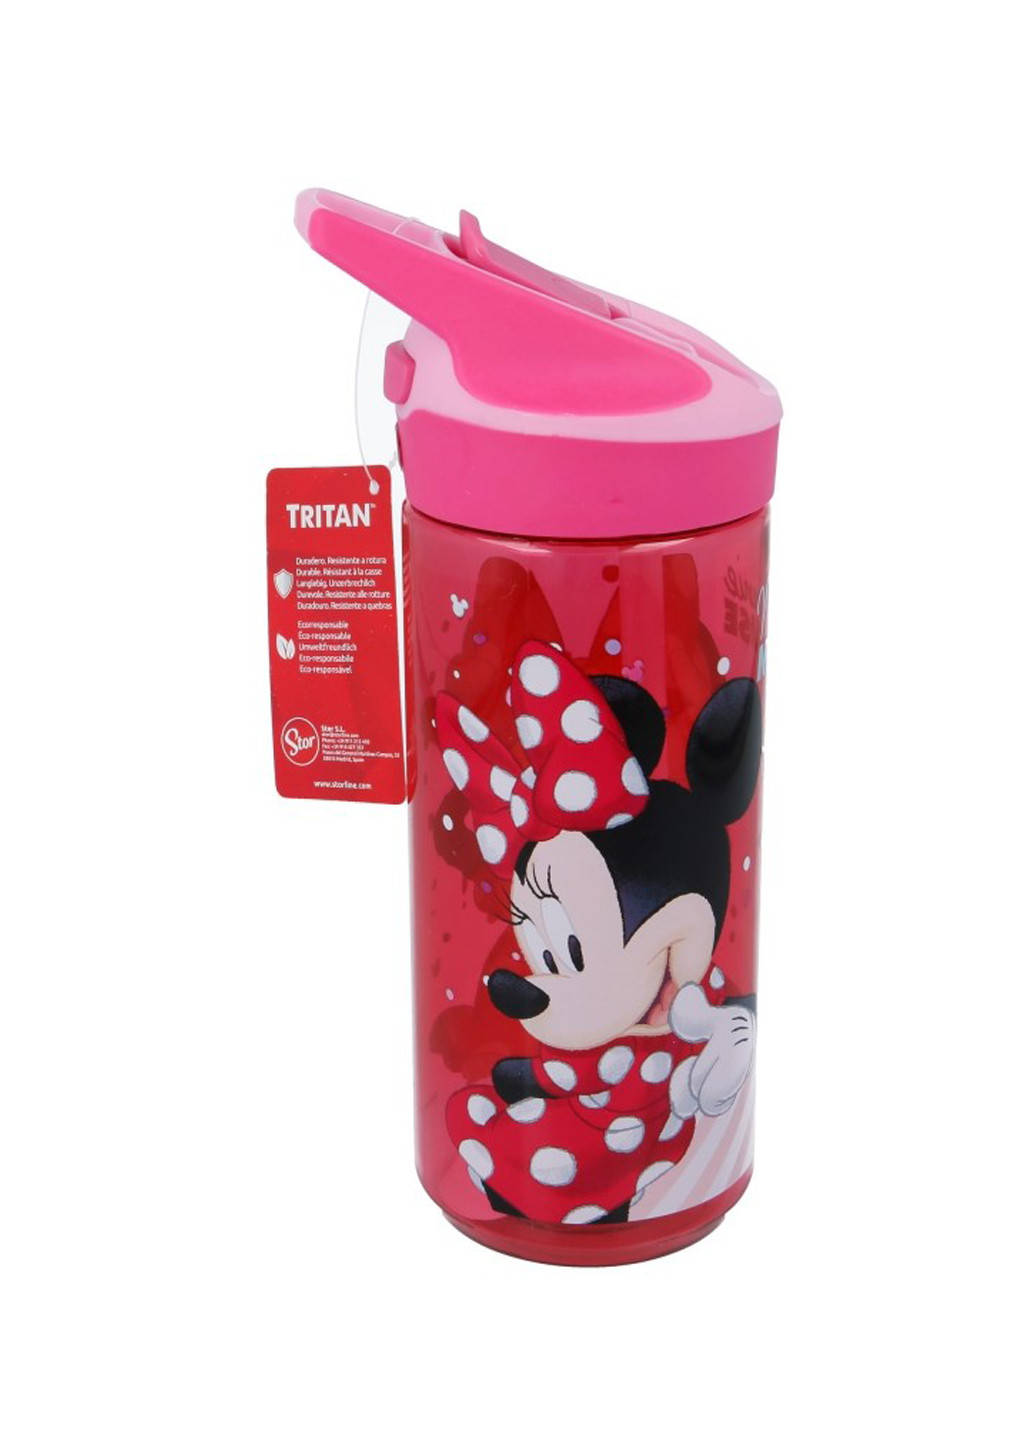 Бутылка Disney - Minnie Mouse Electric Doll, 620 мл Stor (201089872)